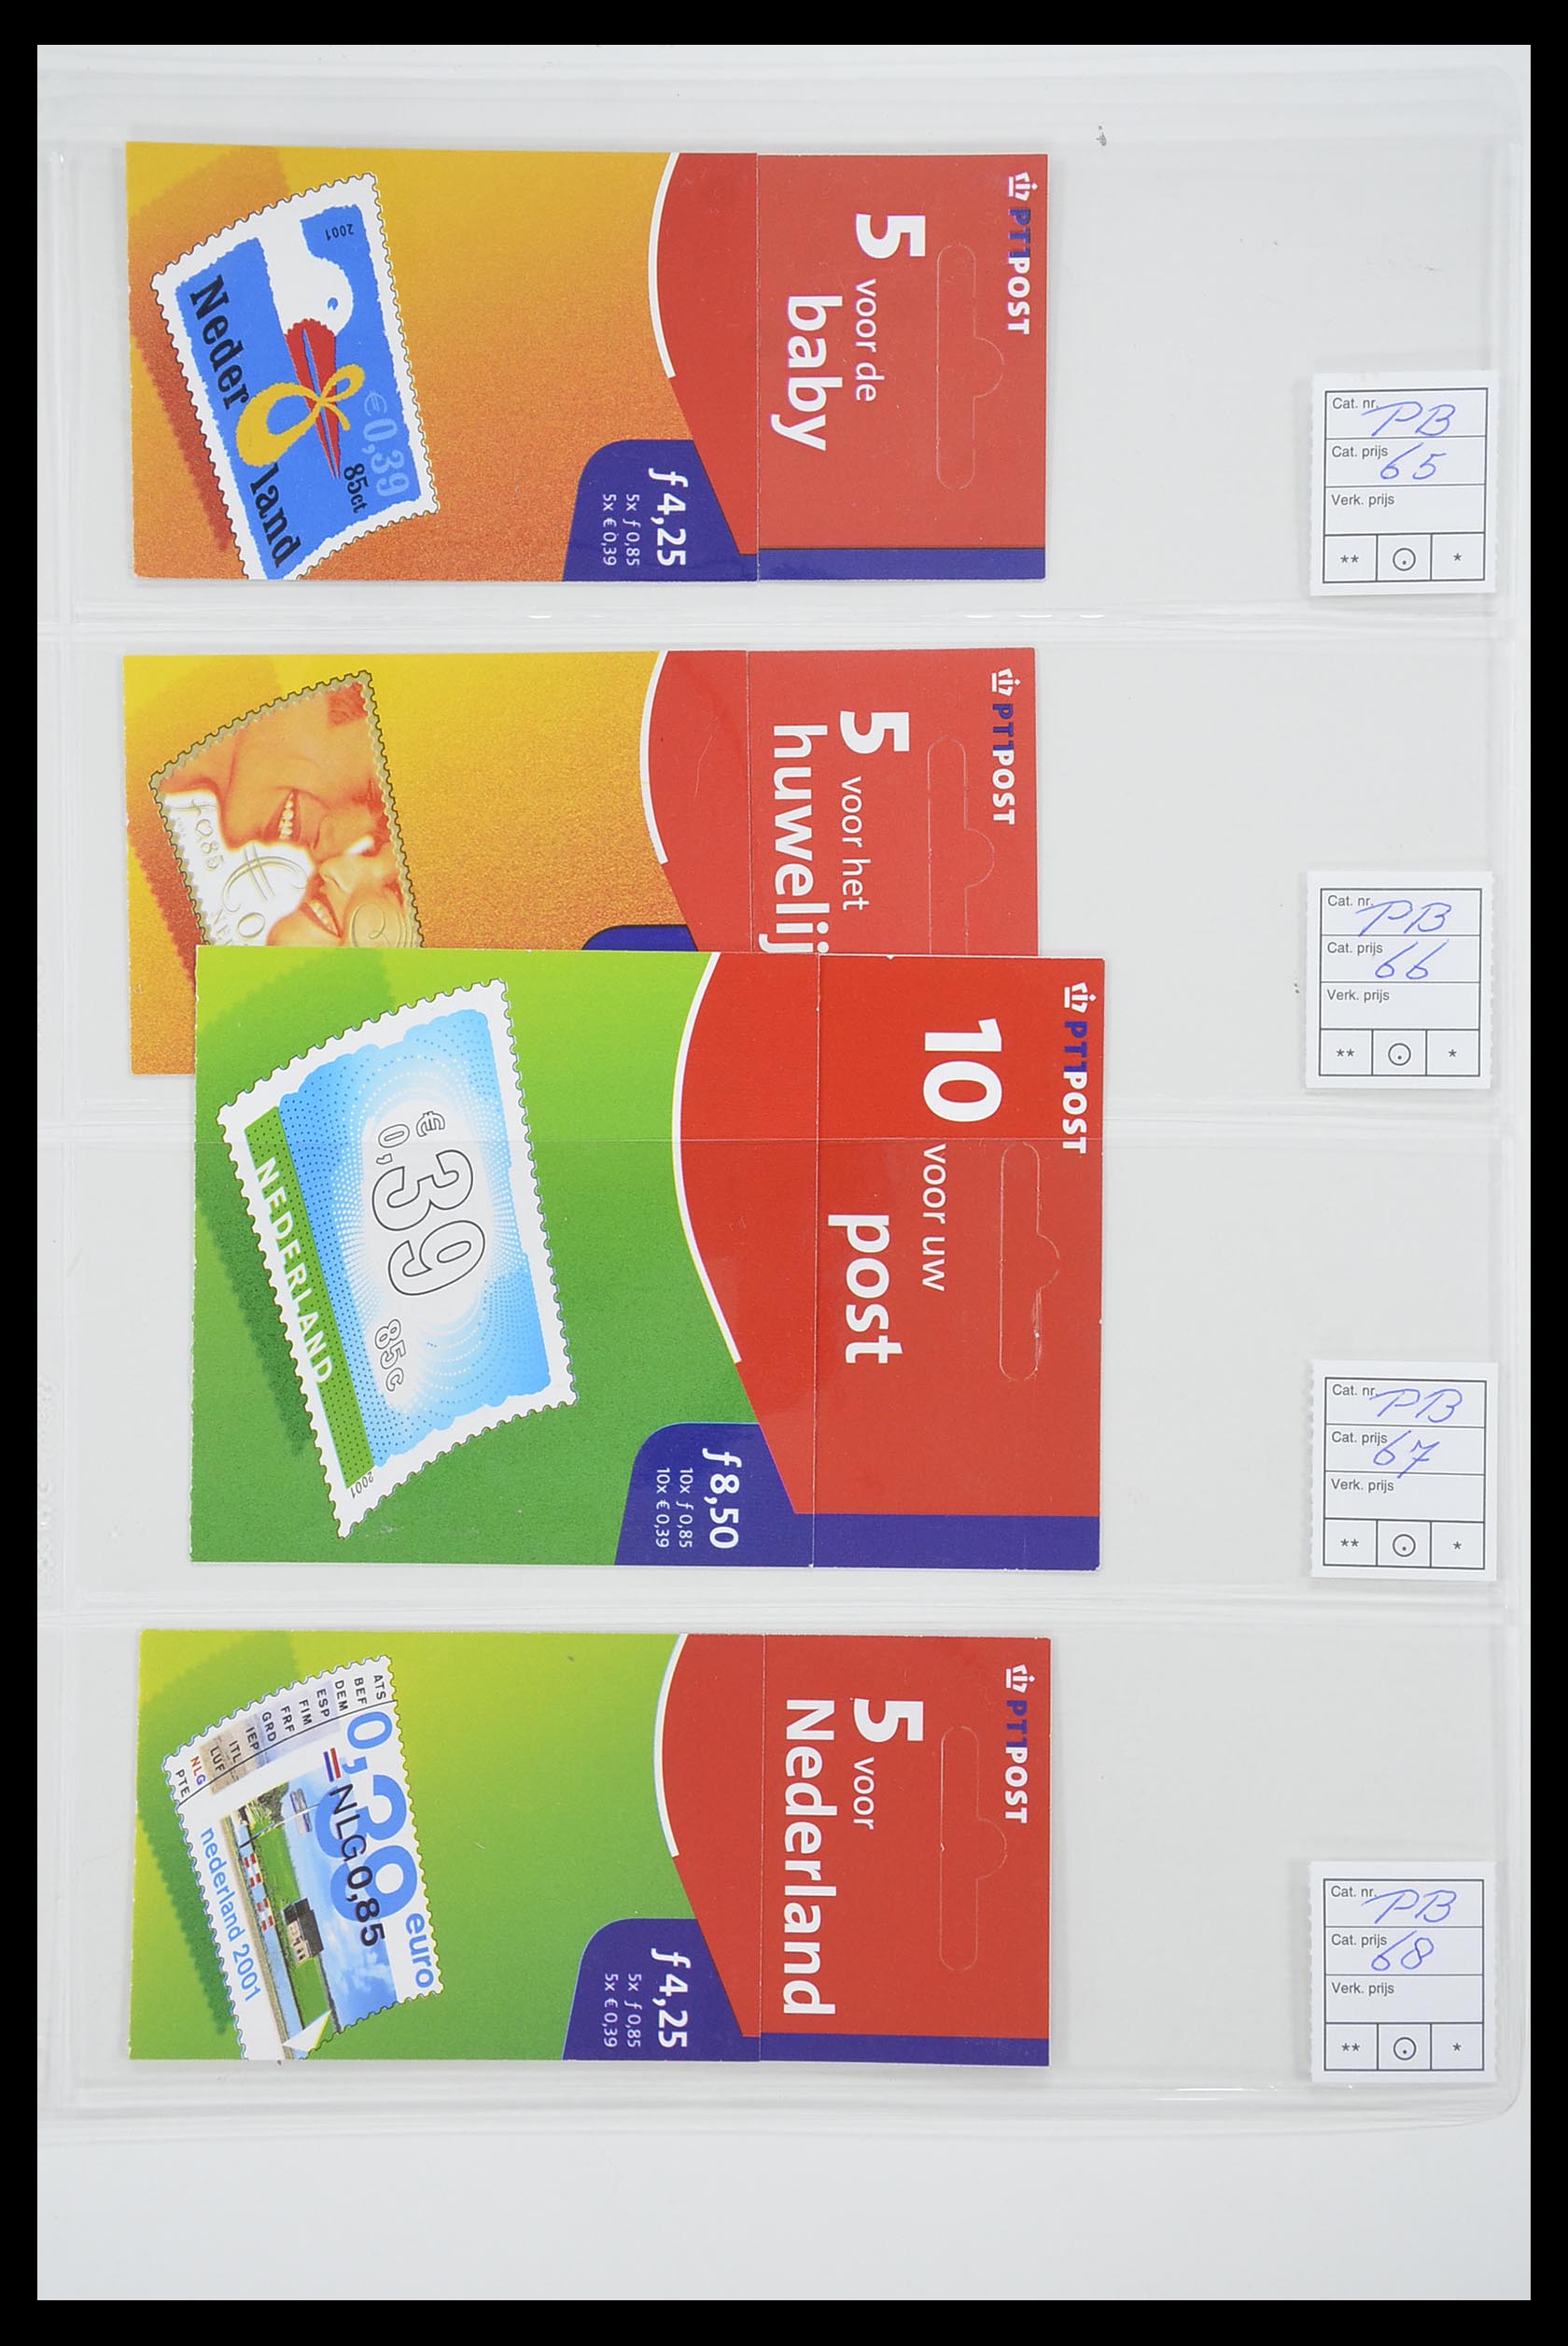 33815 077 - Stamp collection 33815 Netherlands stamp booklets 1964-2001.